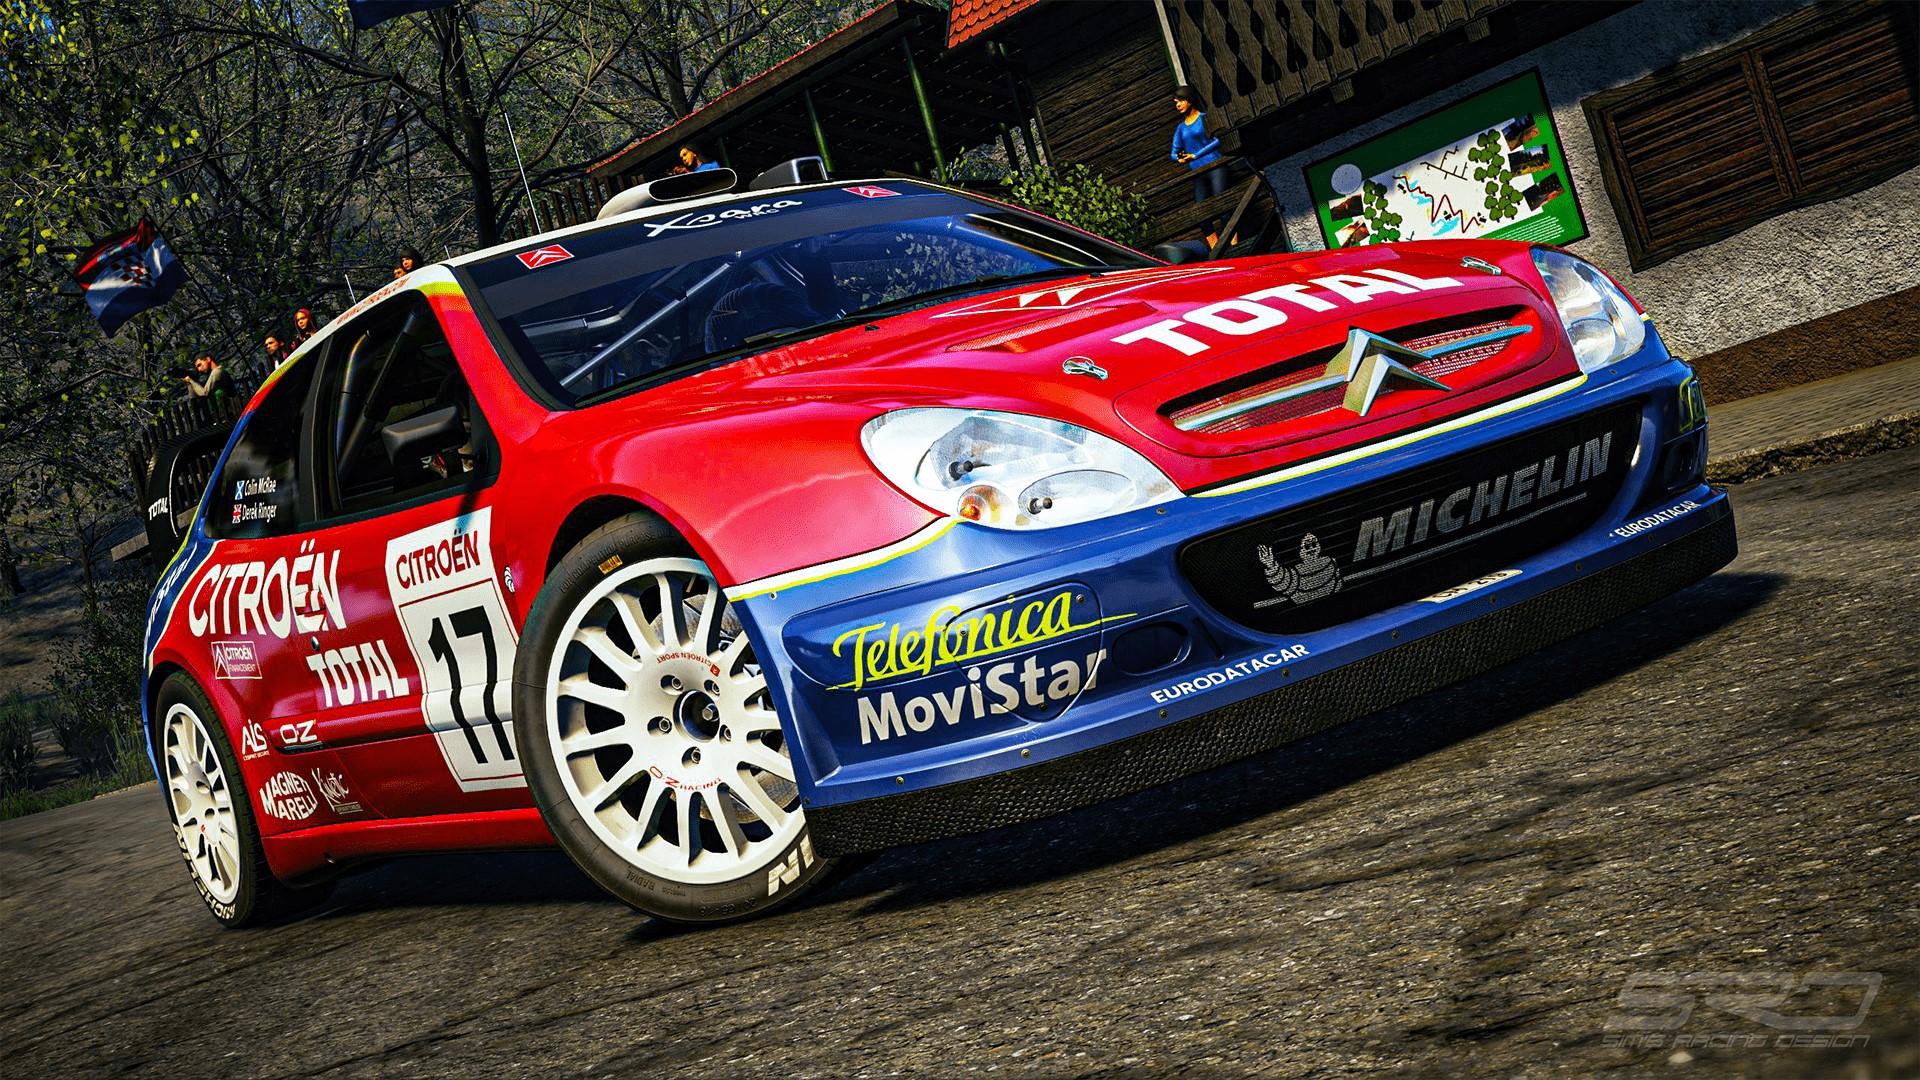 Colin McRae Xsara mod in EA Sports WRC.jpeg